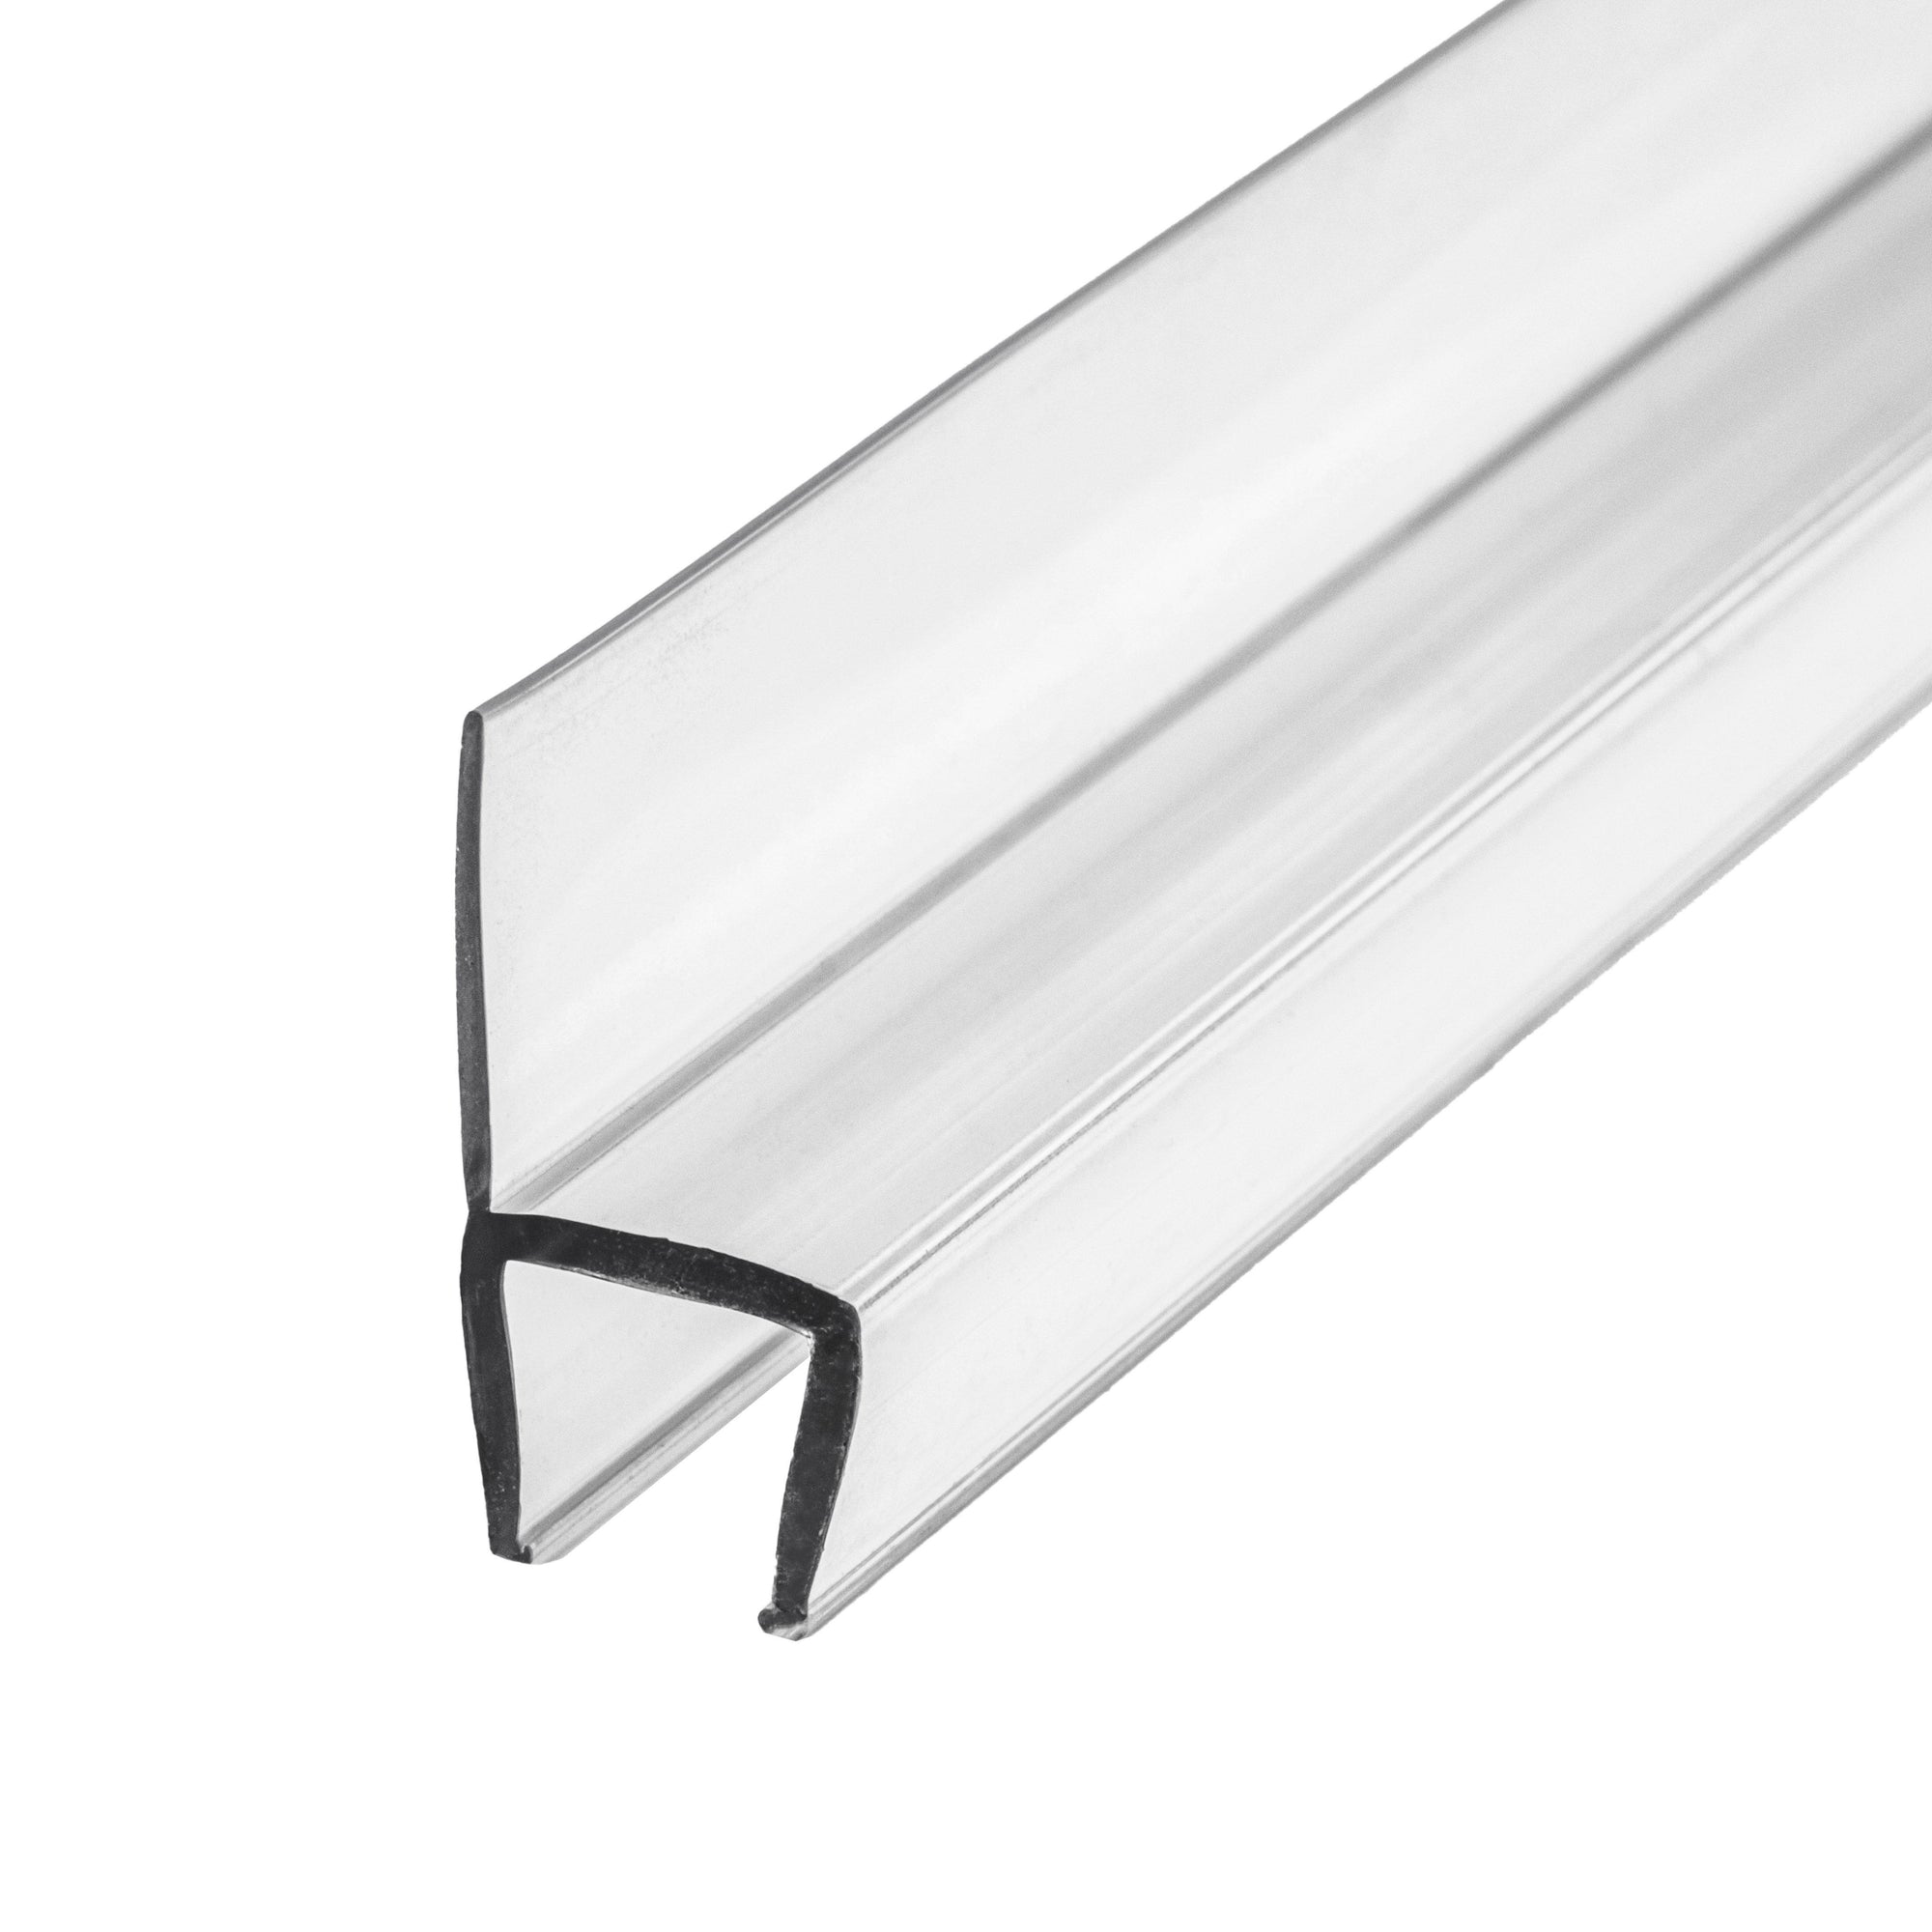 Shower Door Side Seal Strip for 1/4" Glass, "h" Jamb 78" Long